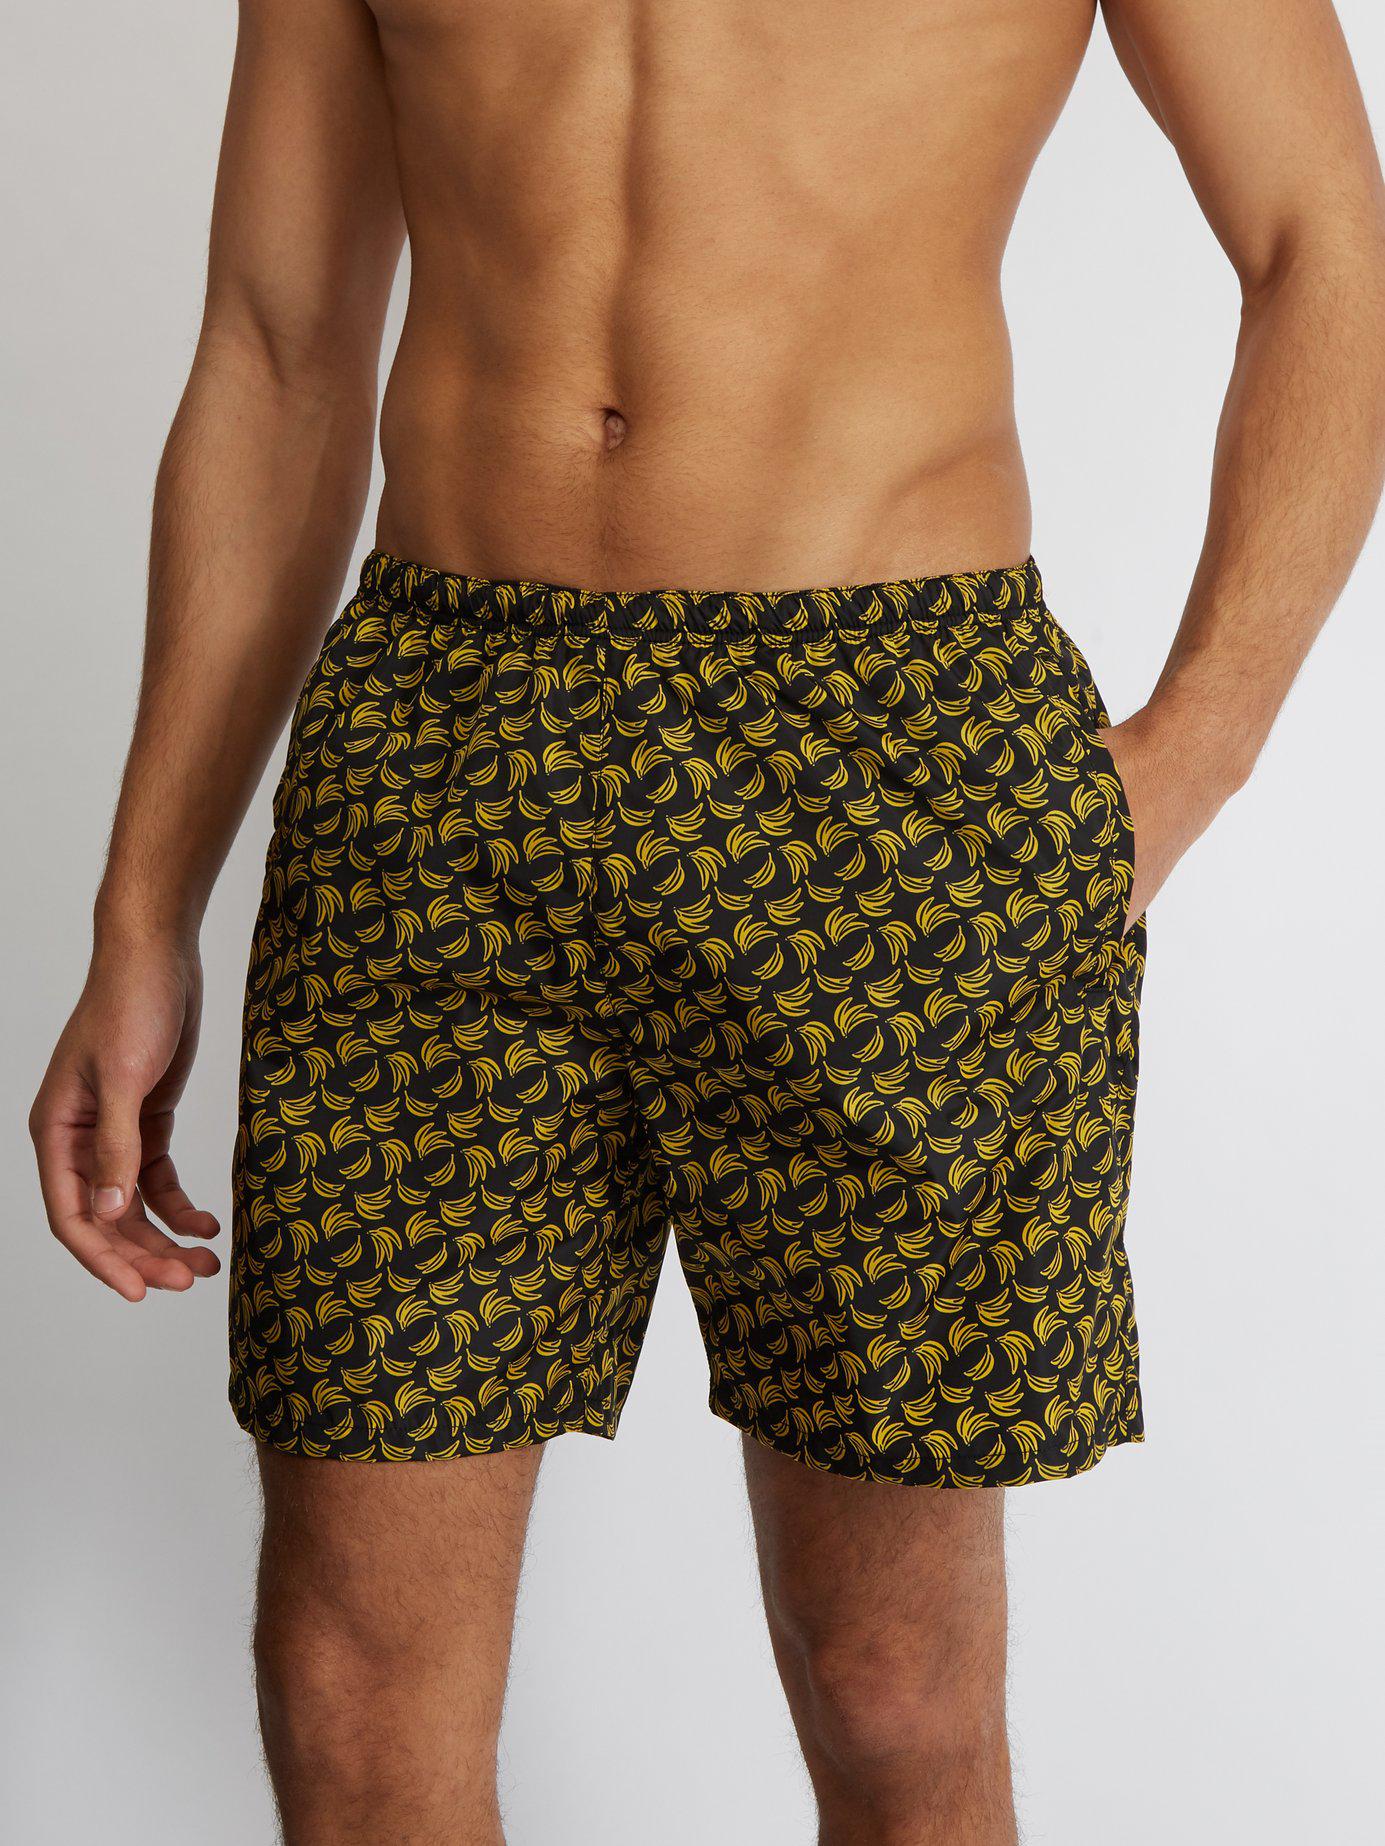 Prada Synthetic Banana Print Swim Shorts for Men - Lyst